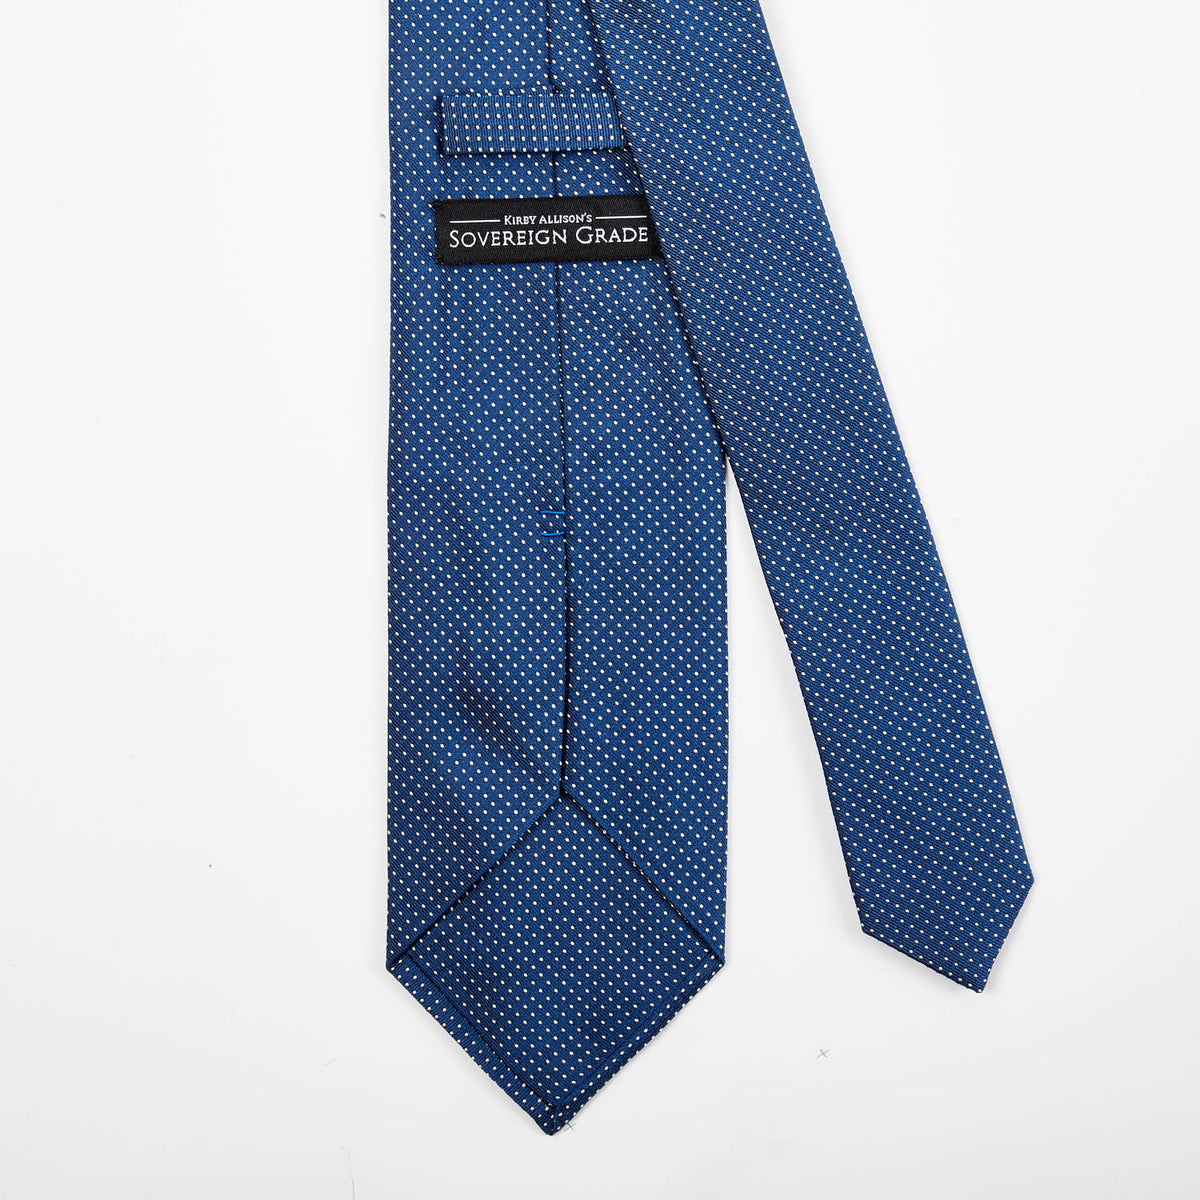 A handmade Sovereign Grade Blue Silk Micro Dot tie from KirbyAllison.com on a white background.